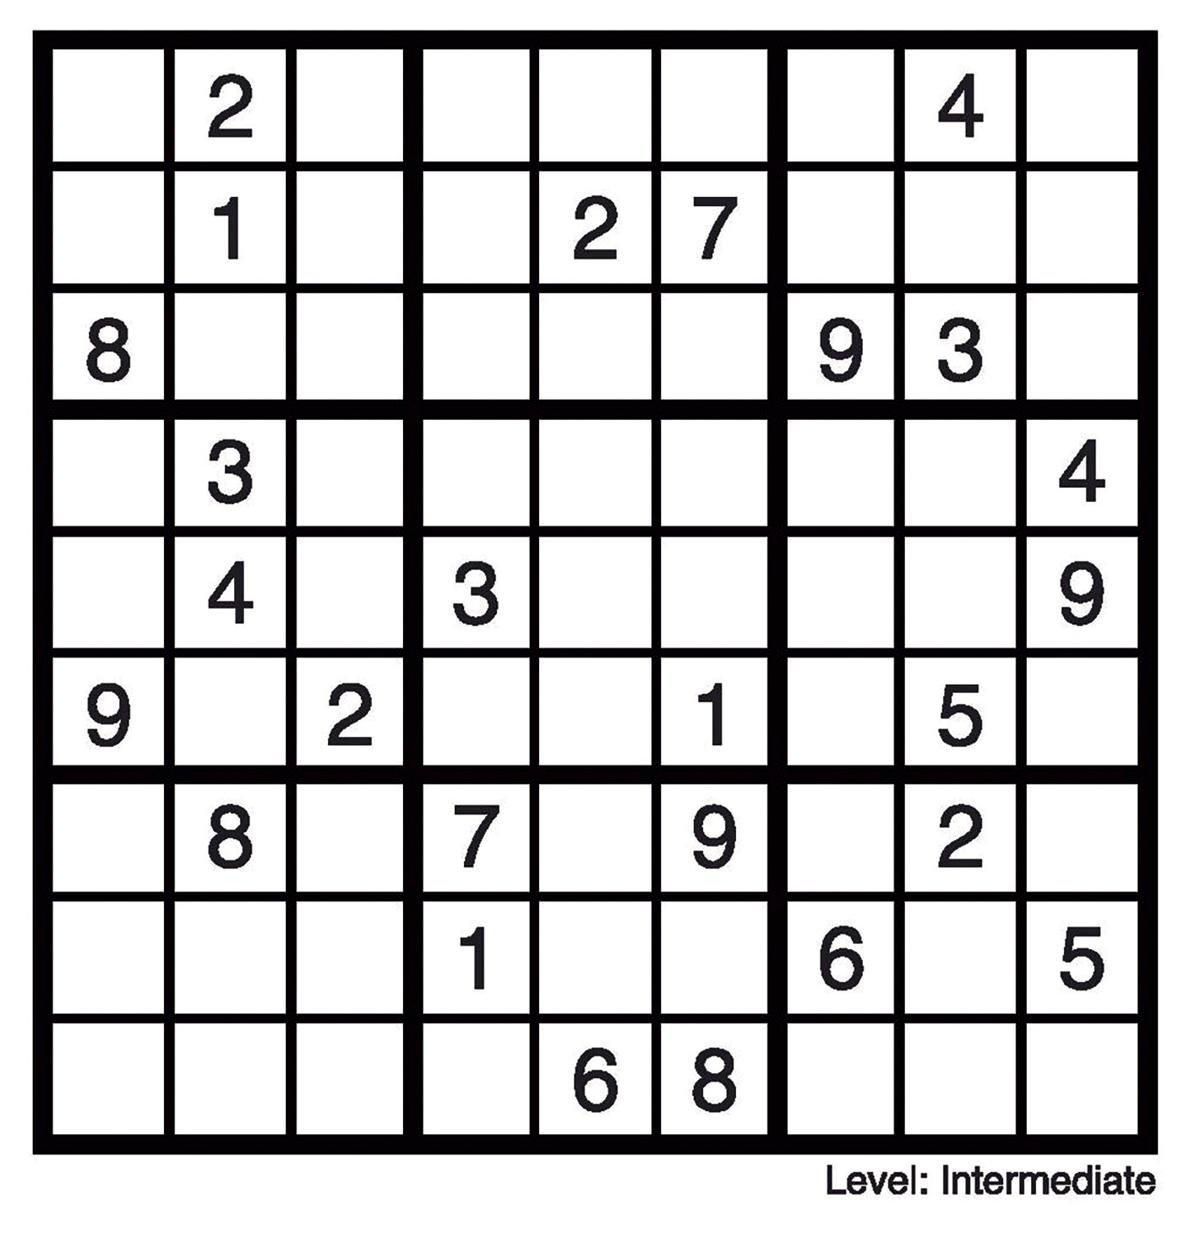 52 Arranged Alphabetically Crossword Clue - Daily Crossword Clue